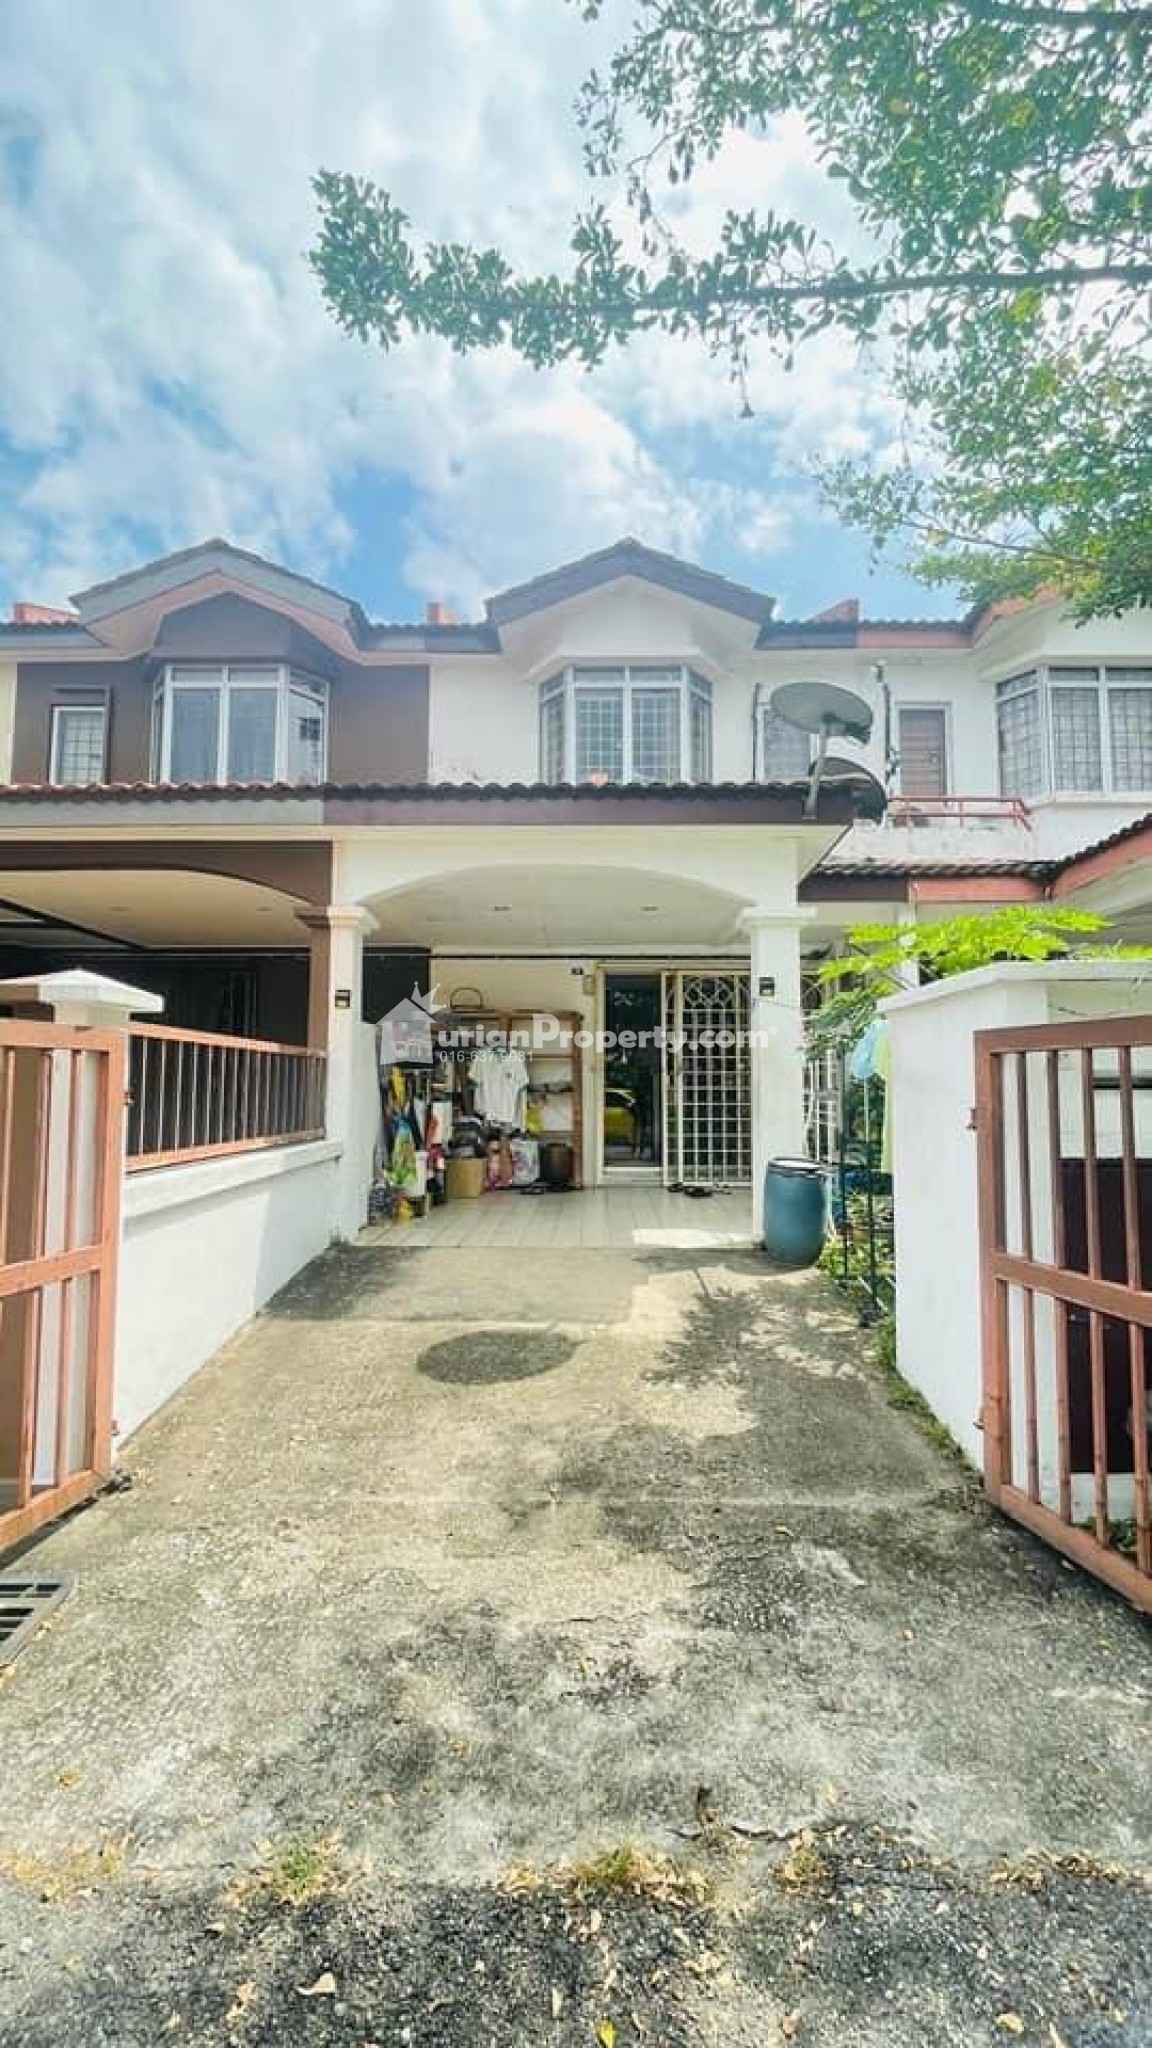 Terrace House For Sale at Bandar Damai Perdana